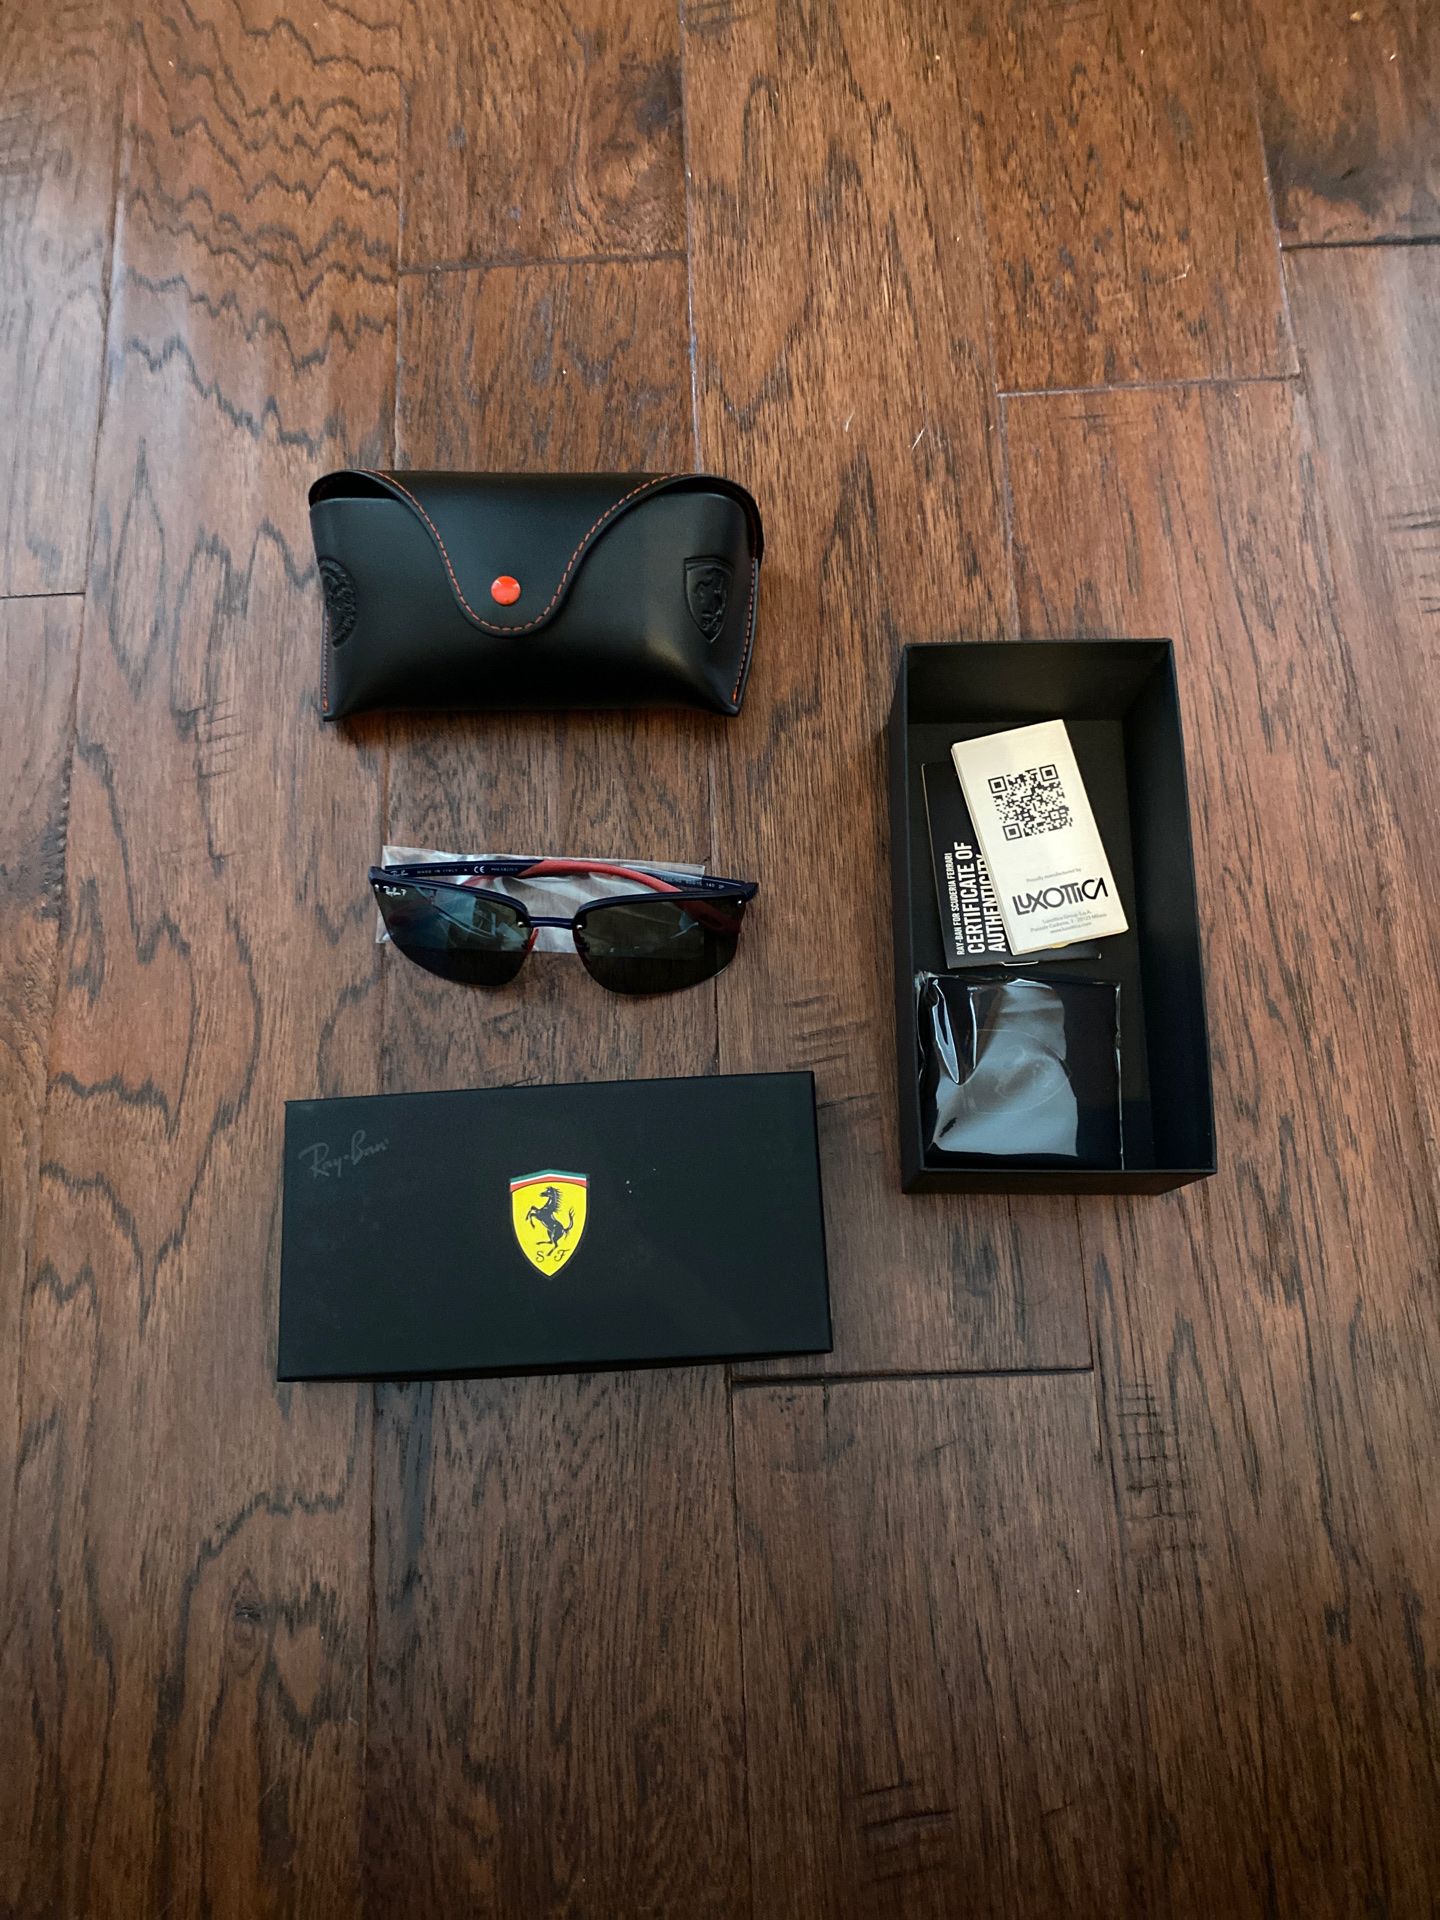 Ray Ban Ferrari Edition Sunglasses